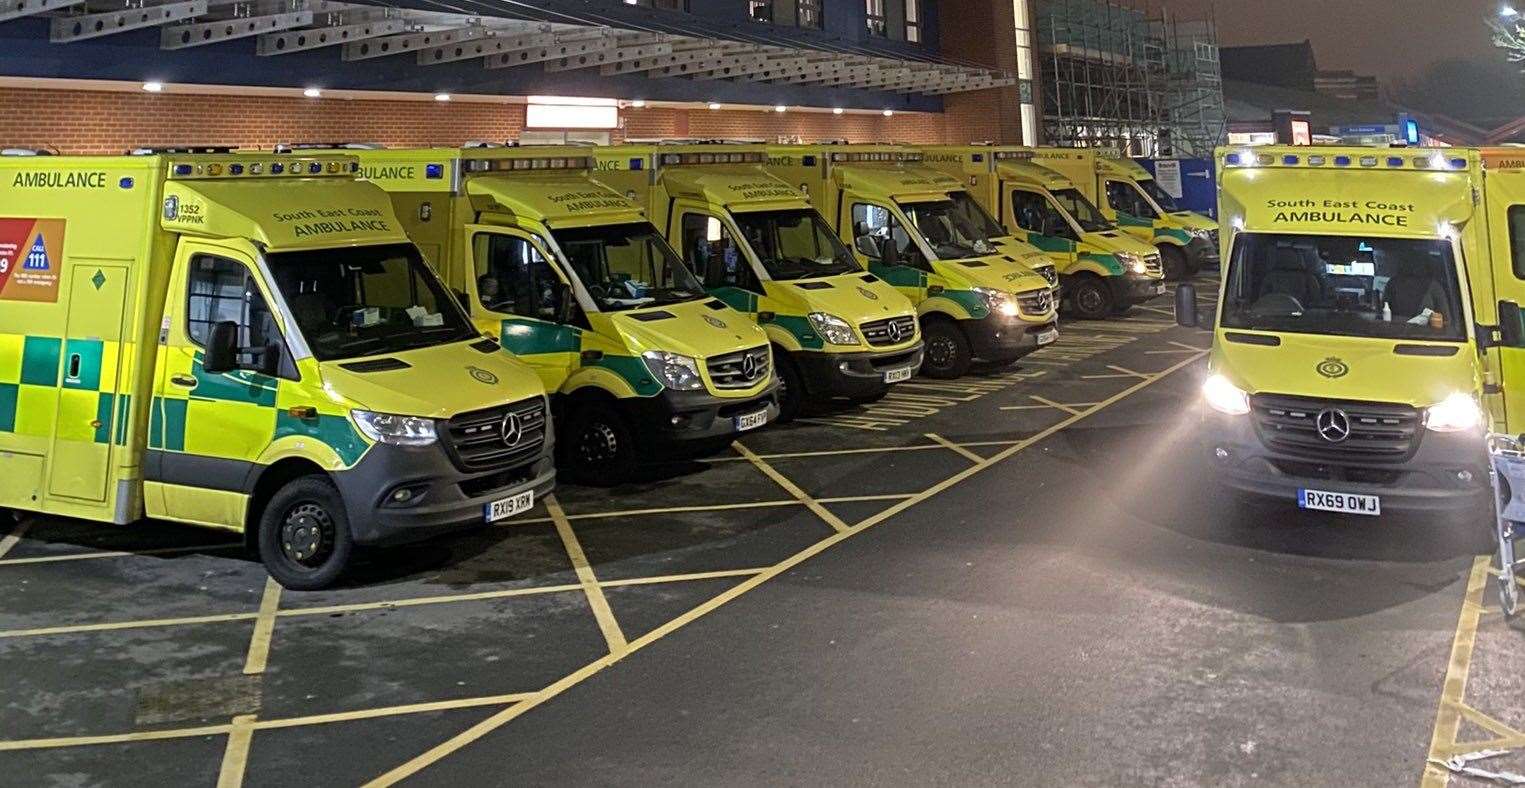 Ambulances waiting outside Medway Hospital. Image from Cameron Walker